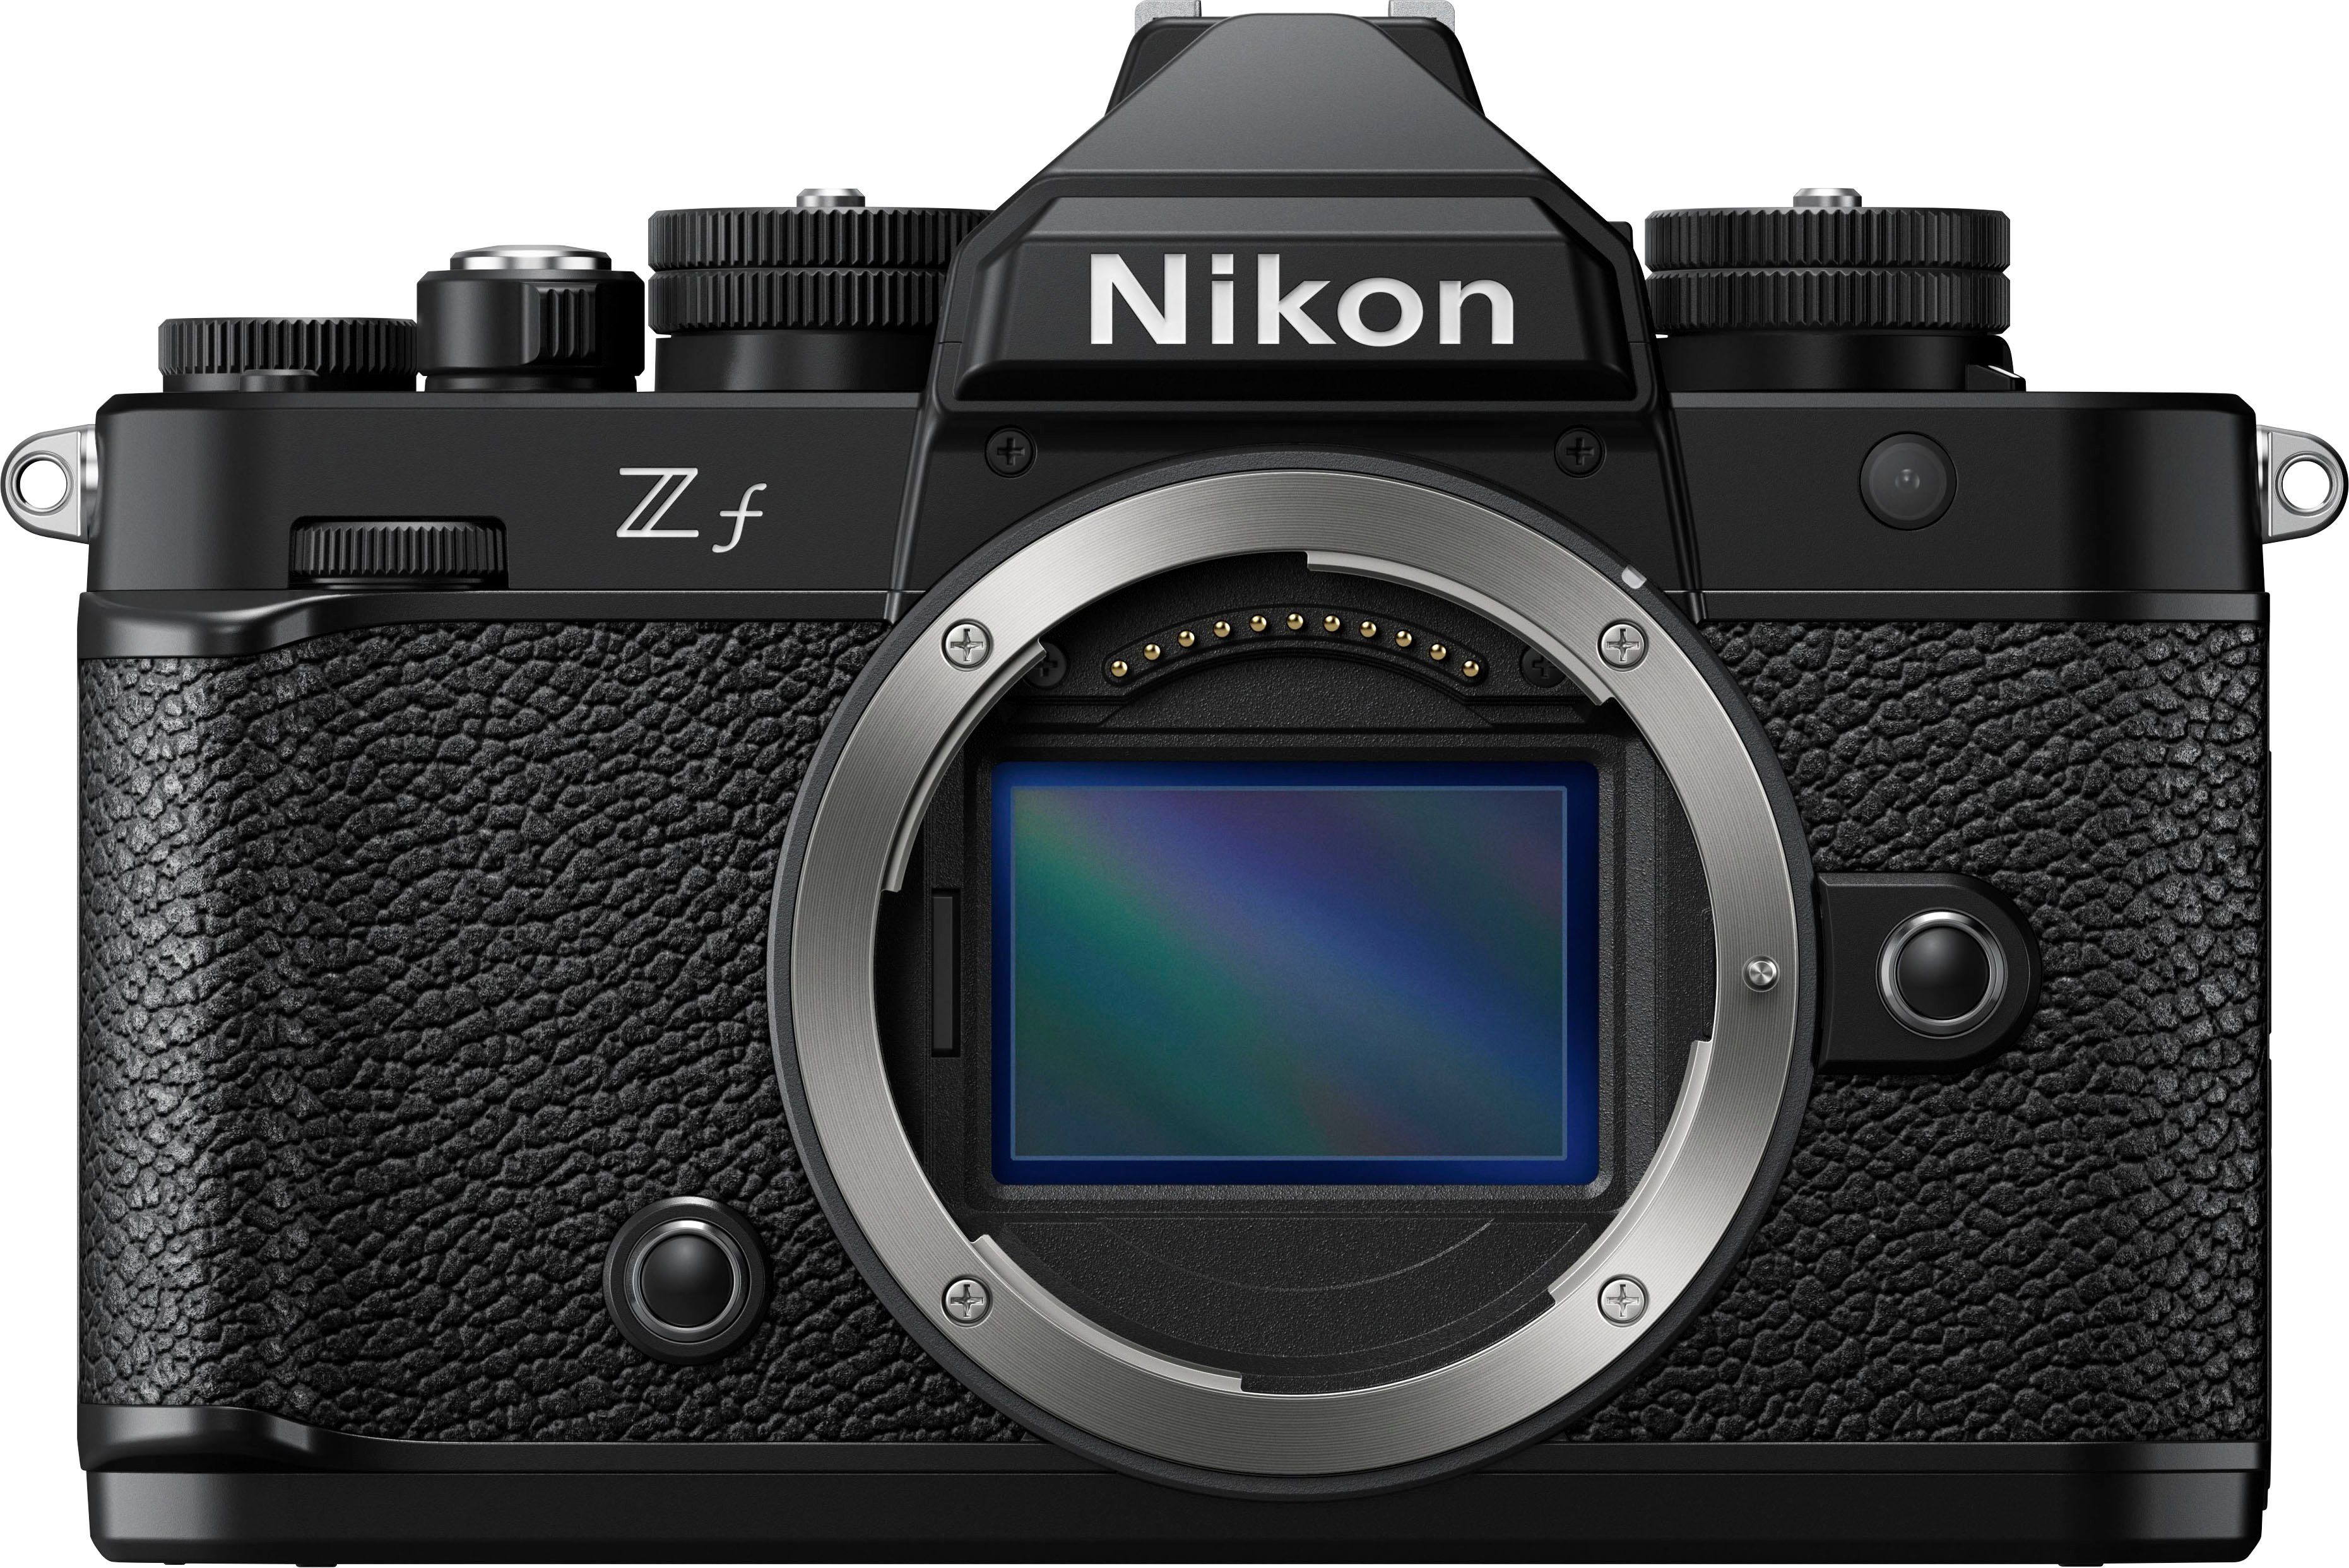 Nikon Z f + NIKKOR WLAN) 24-70mm Bluetooth, f4.0 S, Z Systemkamera mm 24-70 (Nikkor f4 Z